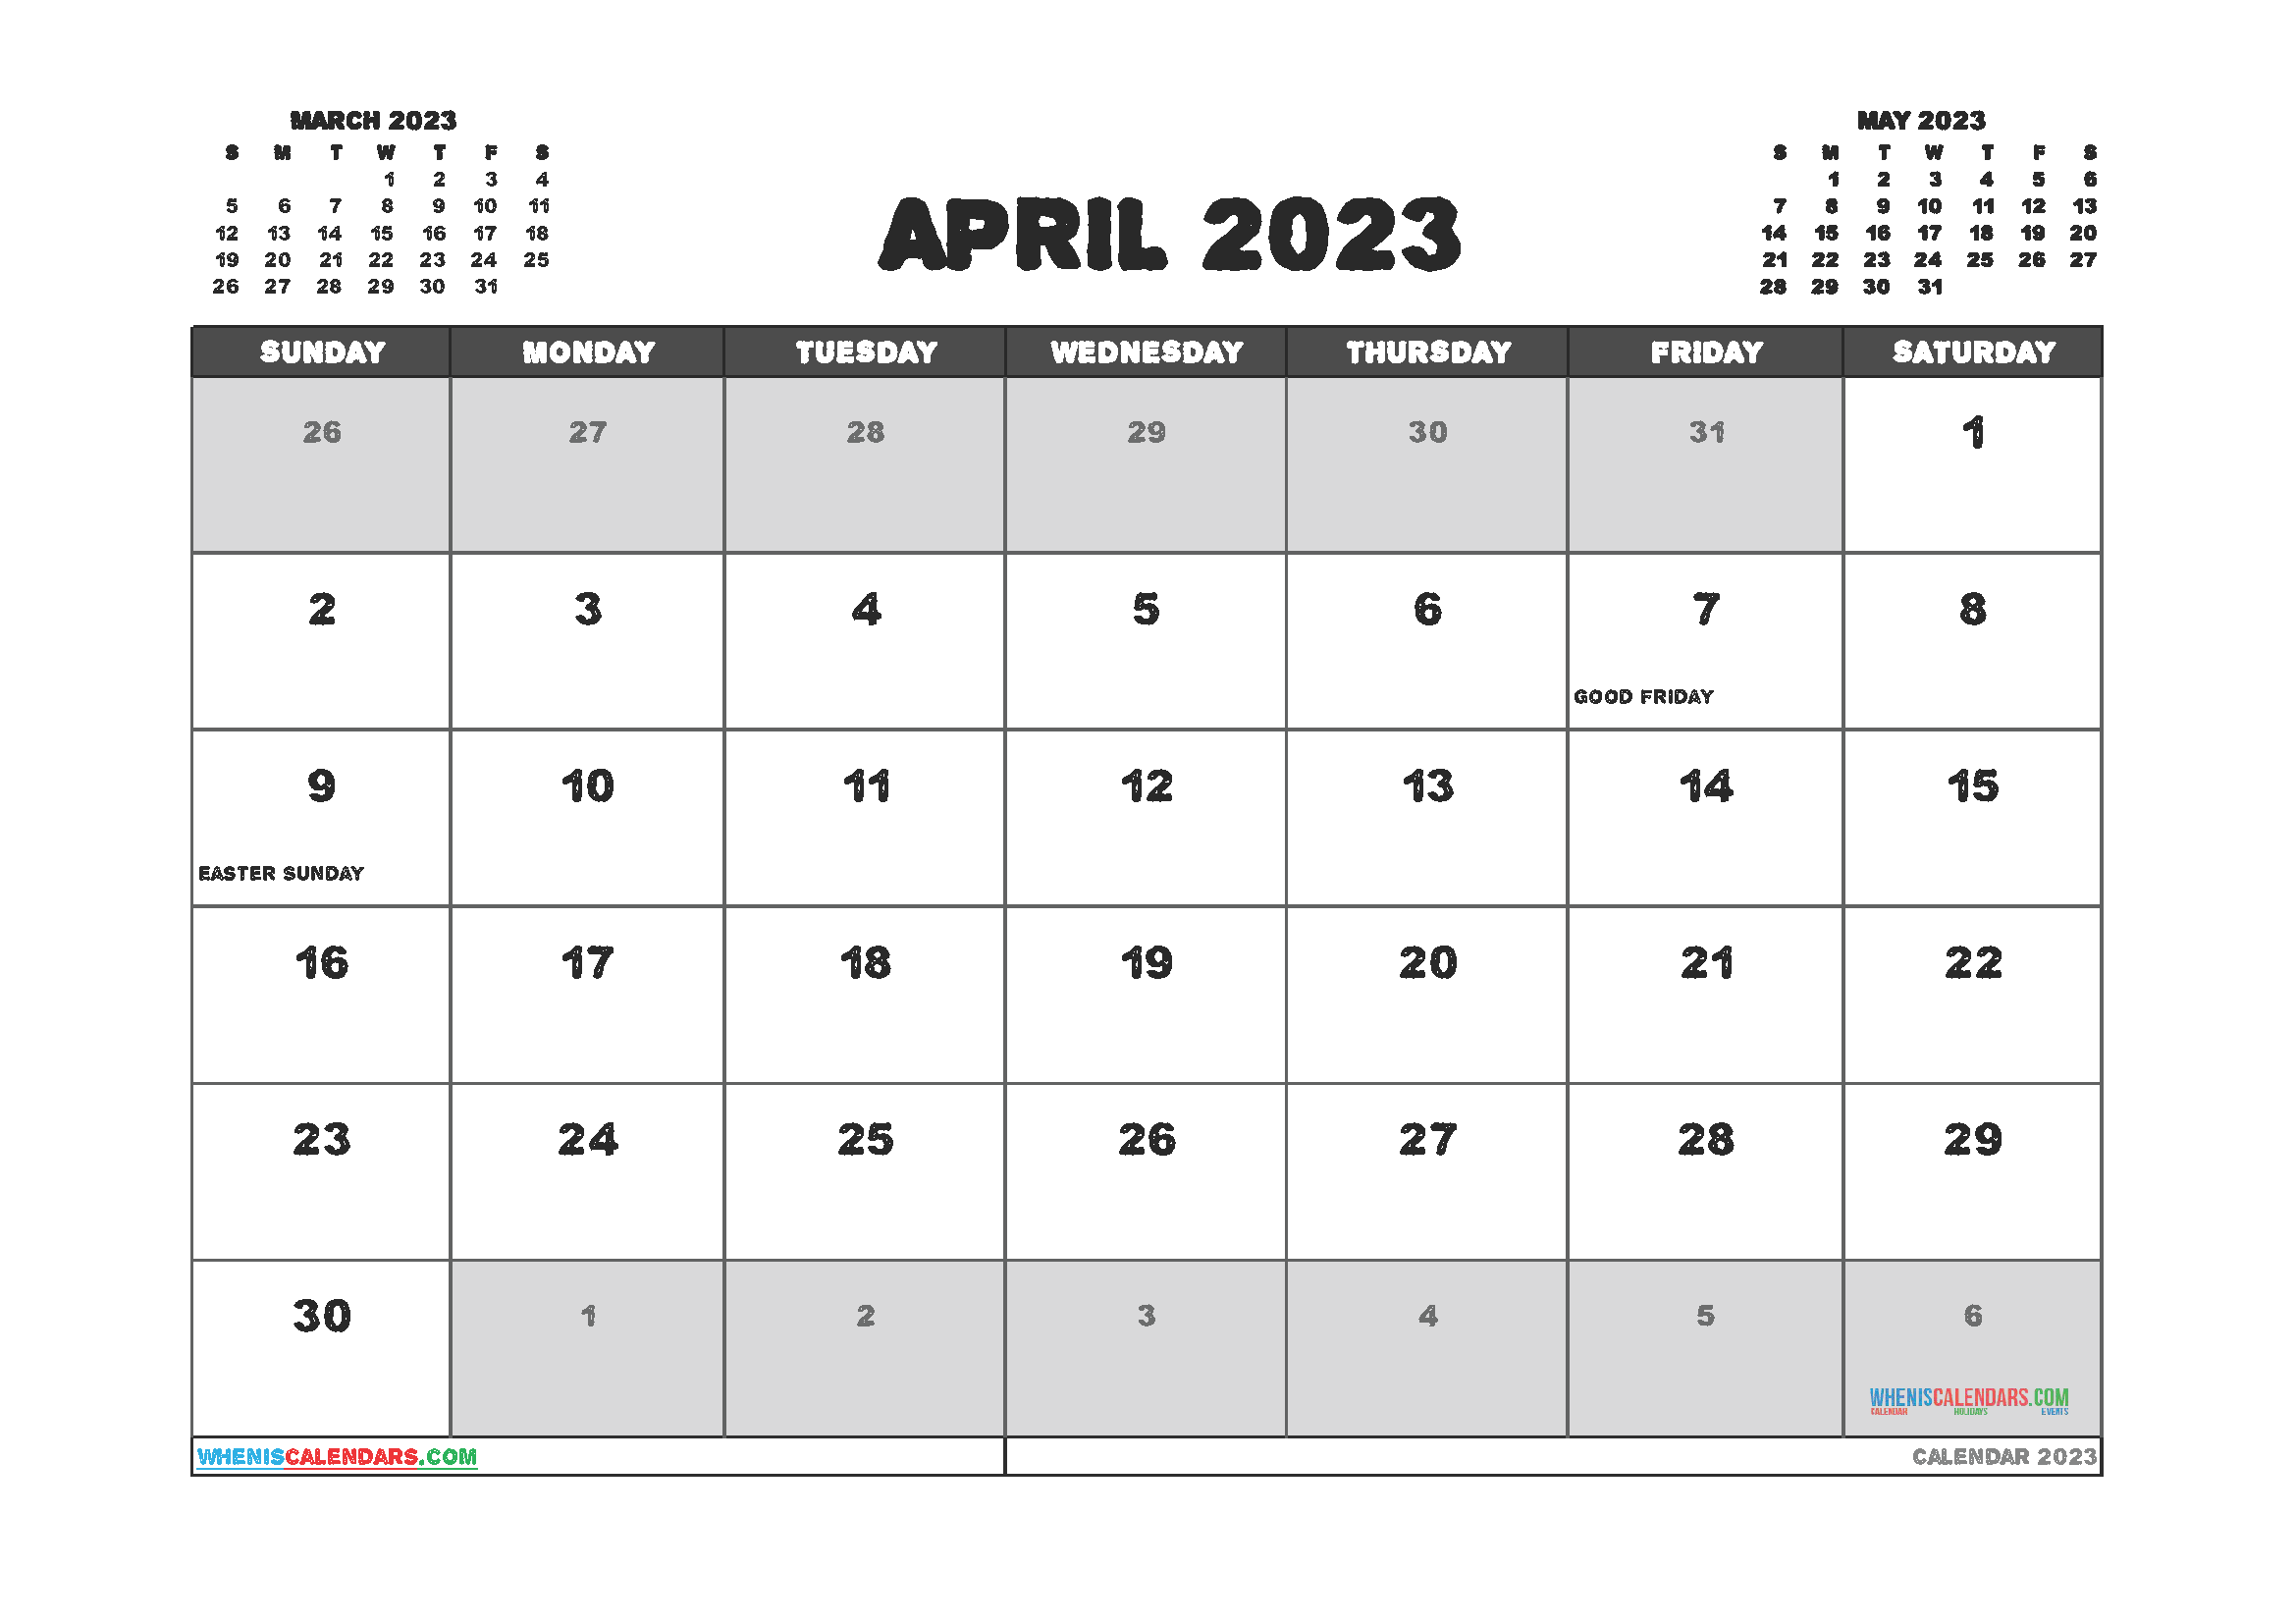 Free Printable Calendar April 2023